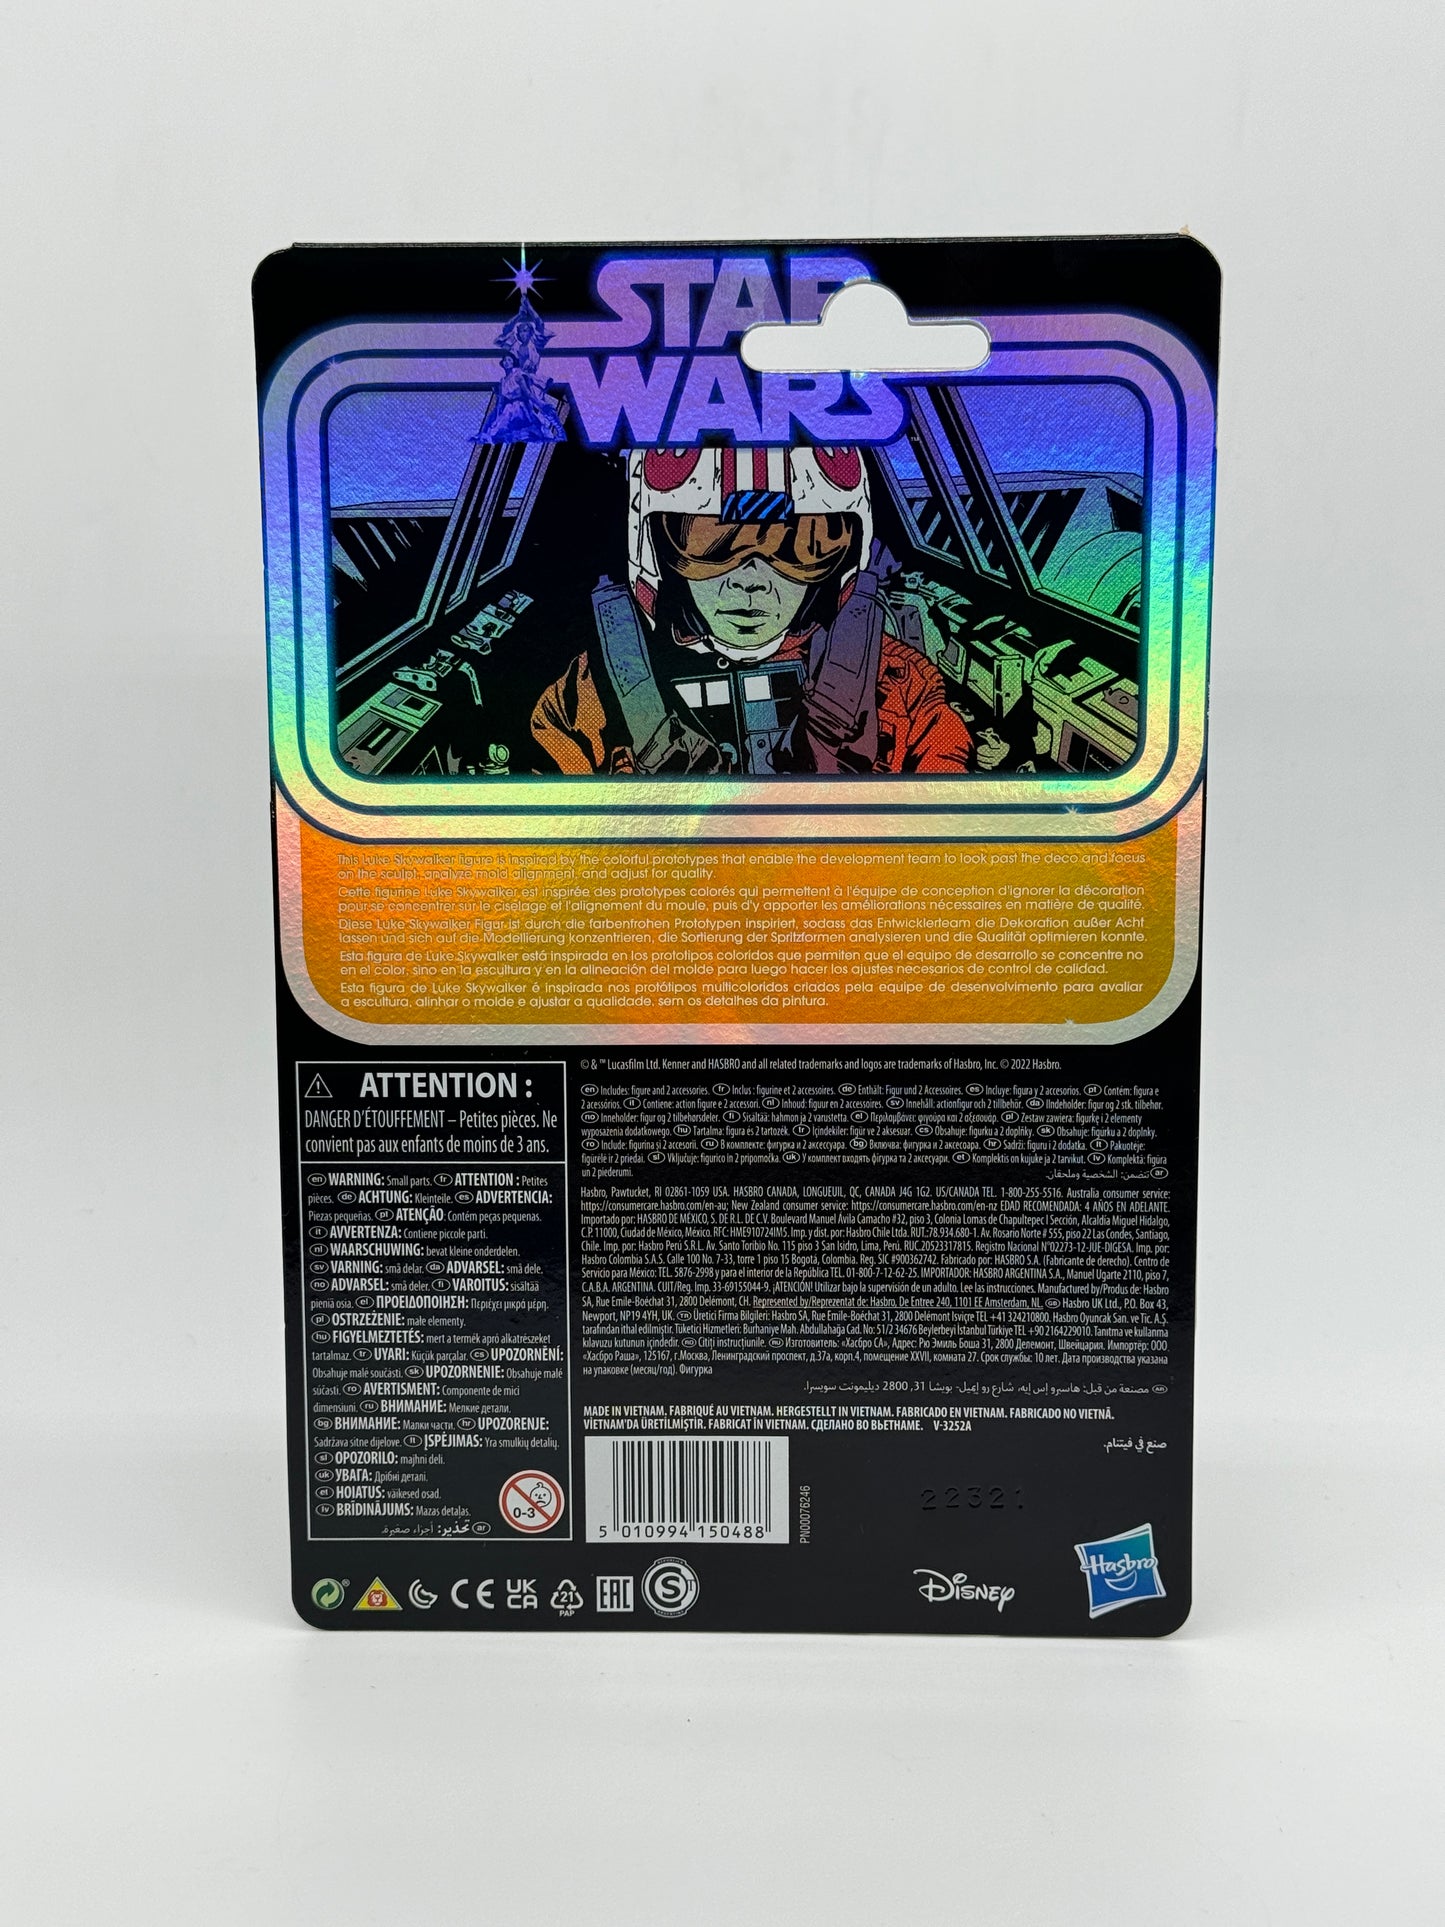 Star Wars Retro Collection "Luke Skywalker Snowspeeder" Prototype Edition Hasbro (#1)